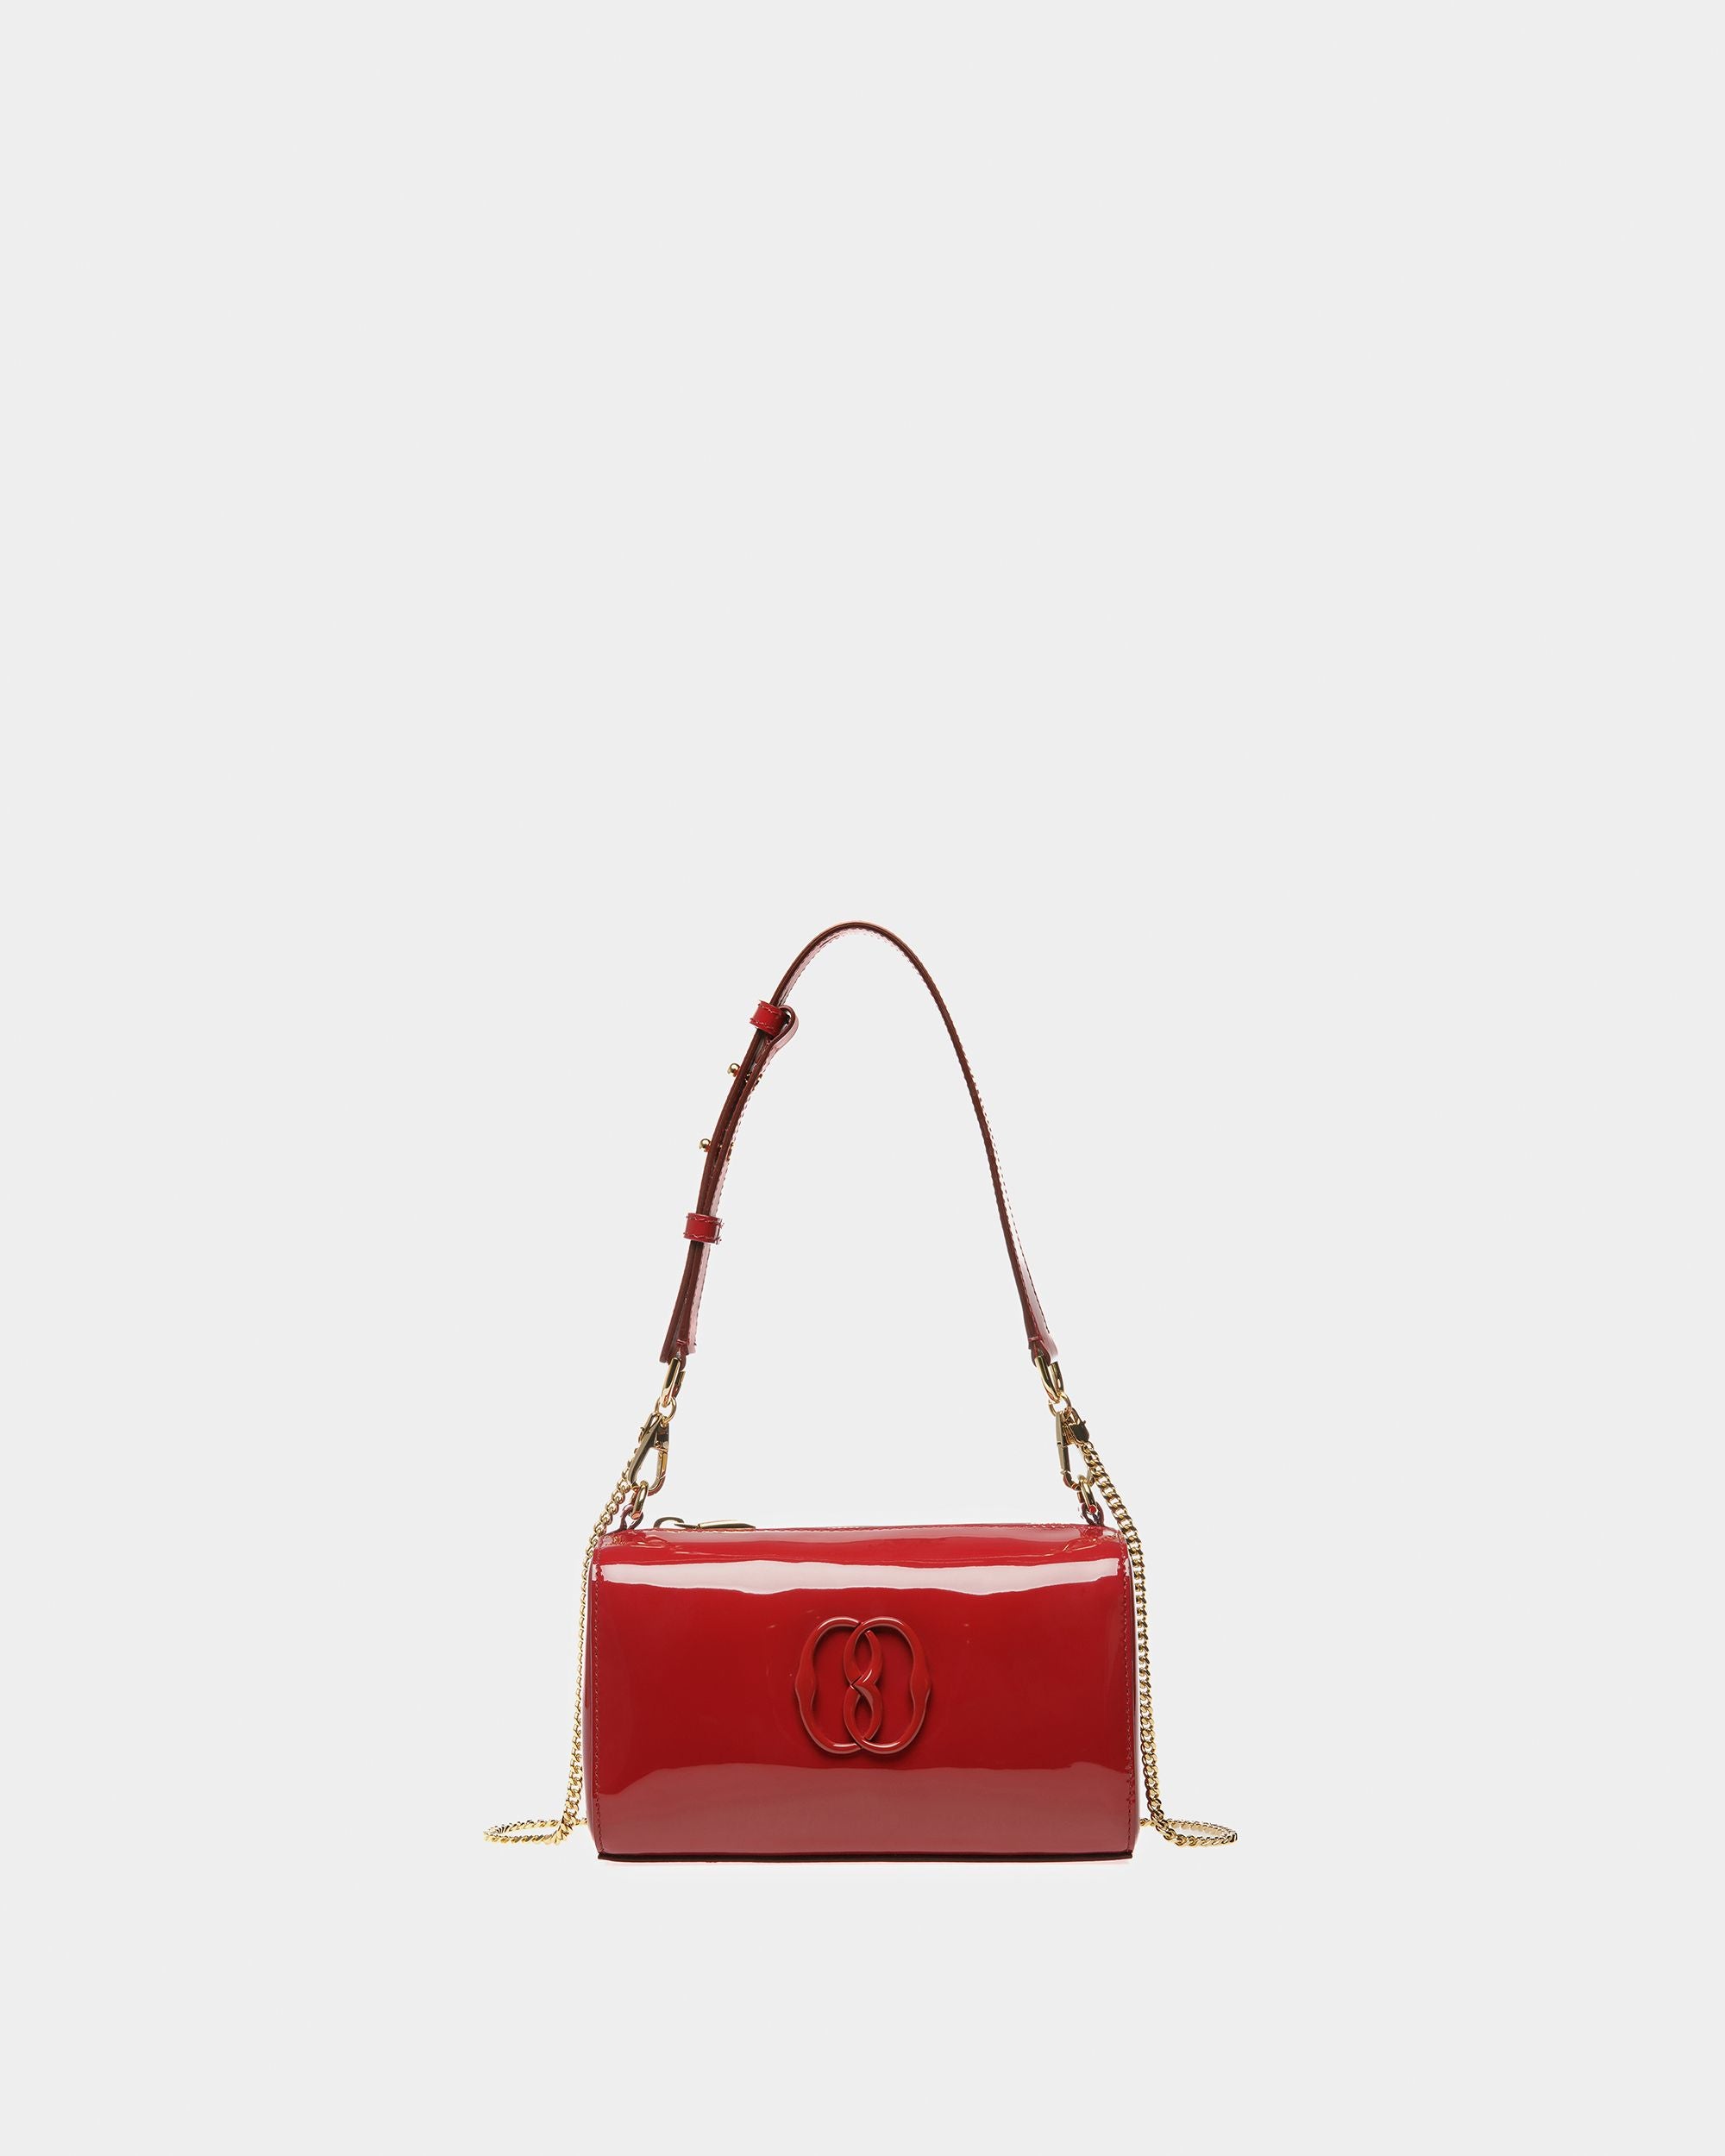 Emblem Rox Minibag | Women's Minibag | Deep Ruby Leather | Bally | Still Life Front